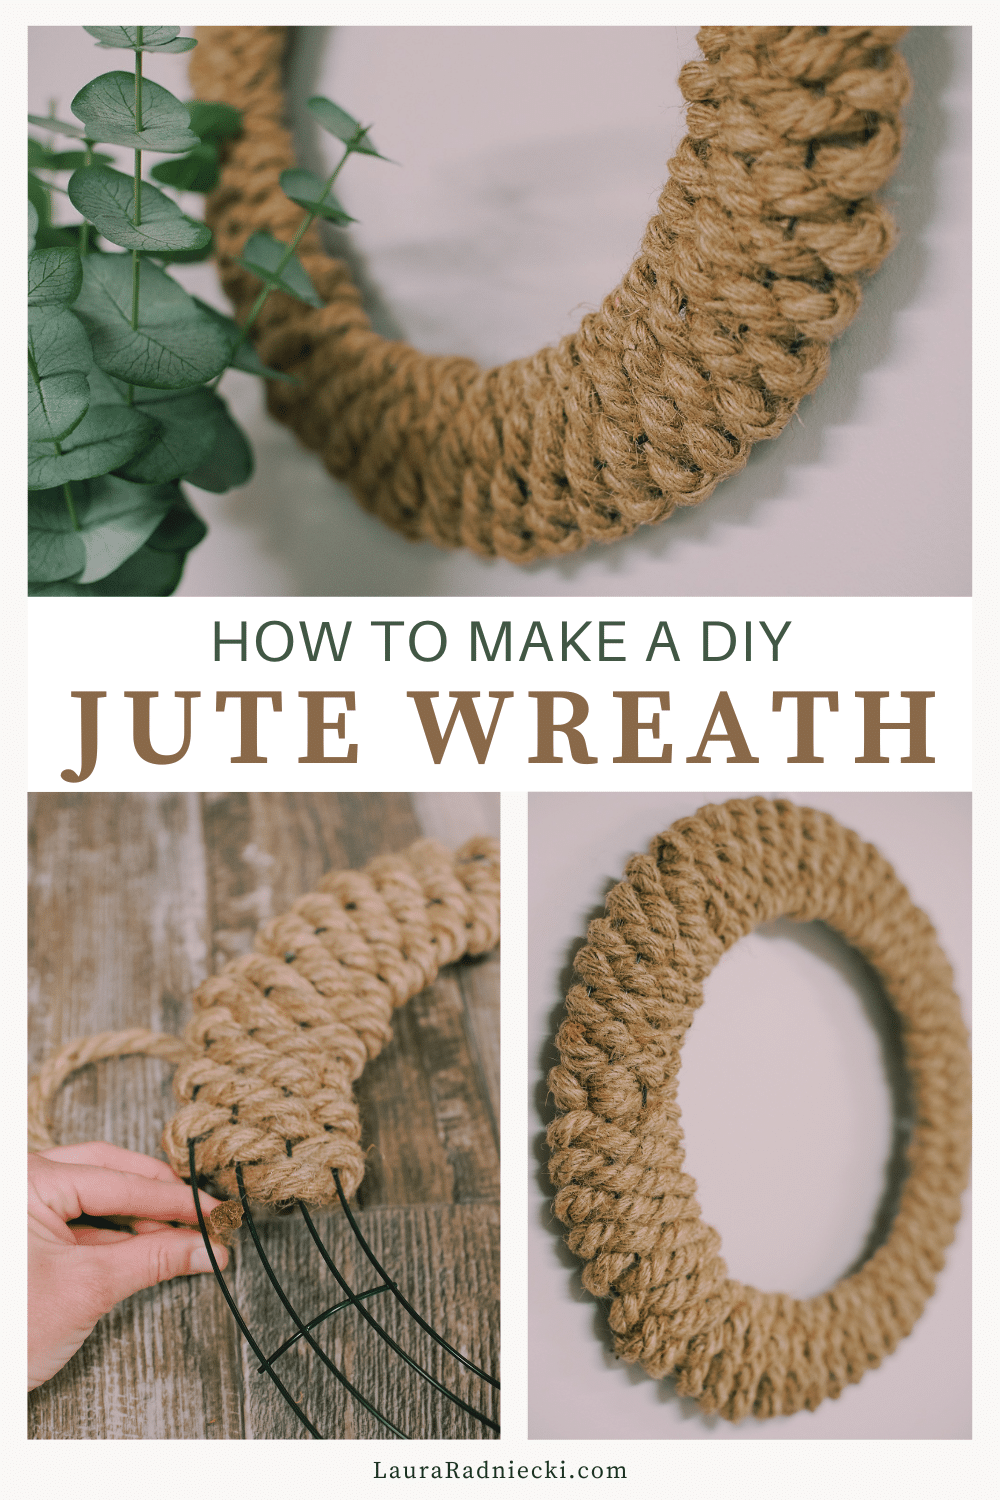 How to Make a Jute Wreath